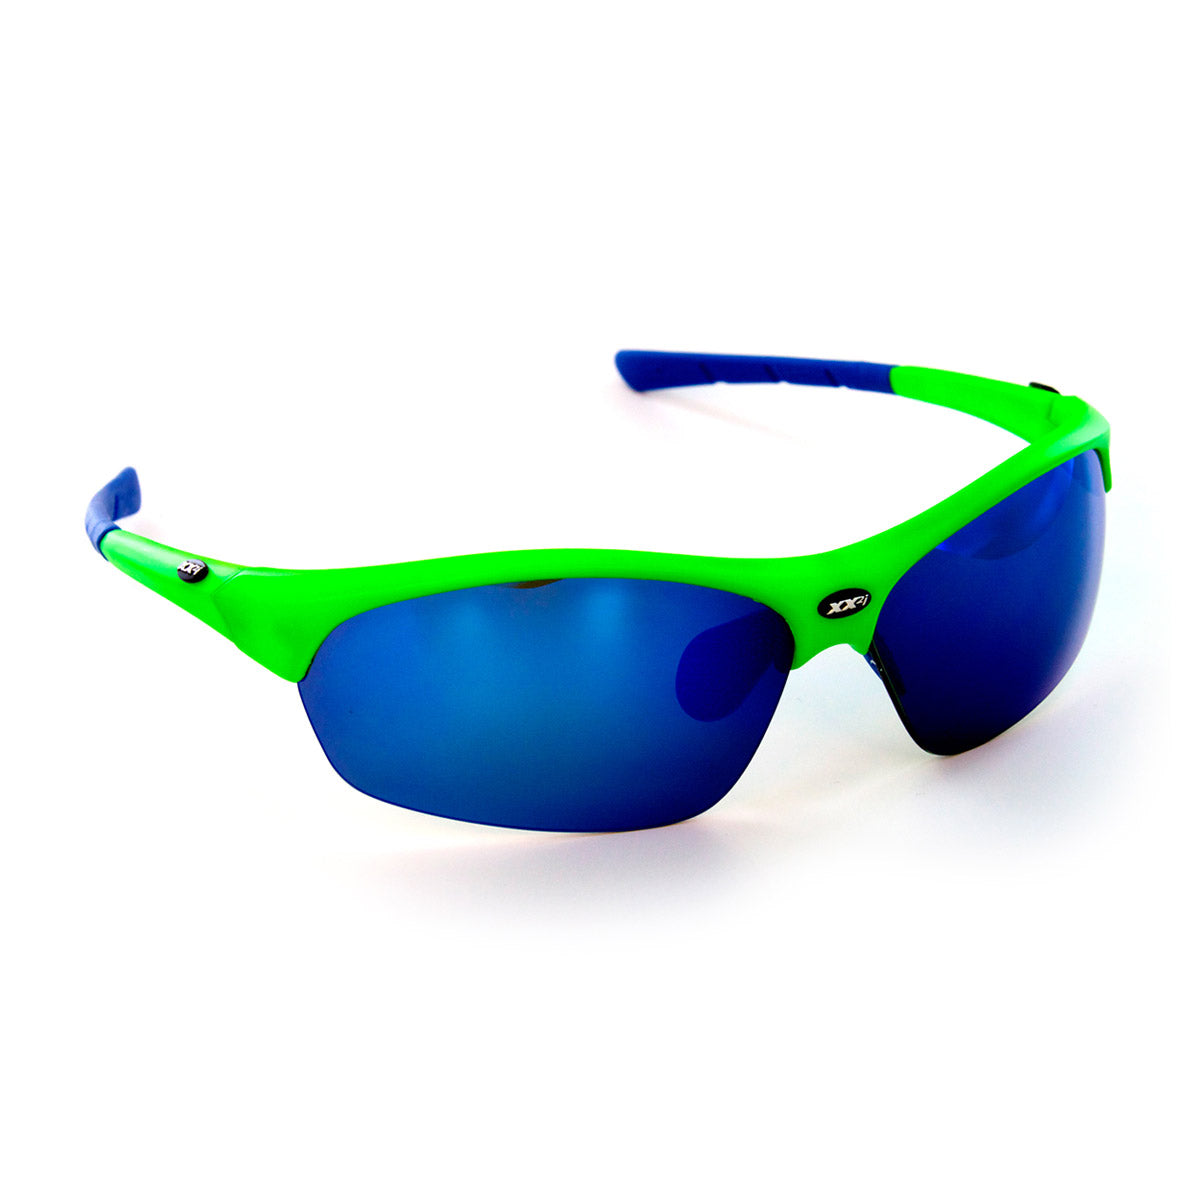 France1 Sport Sunglasses Hyper Green Blue Flash Lenses by XX2i Optics